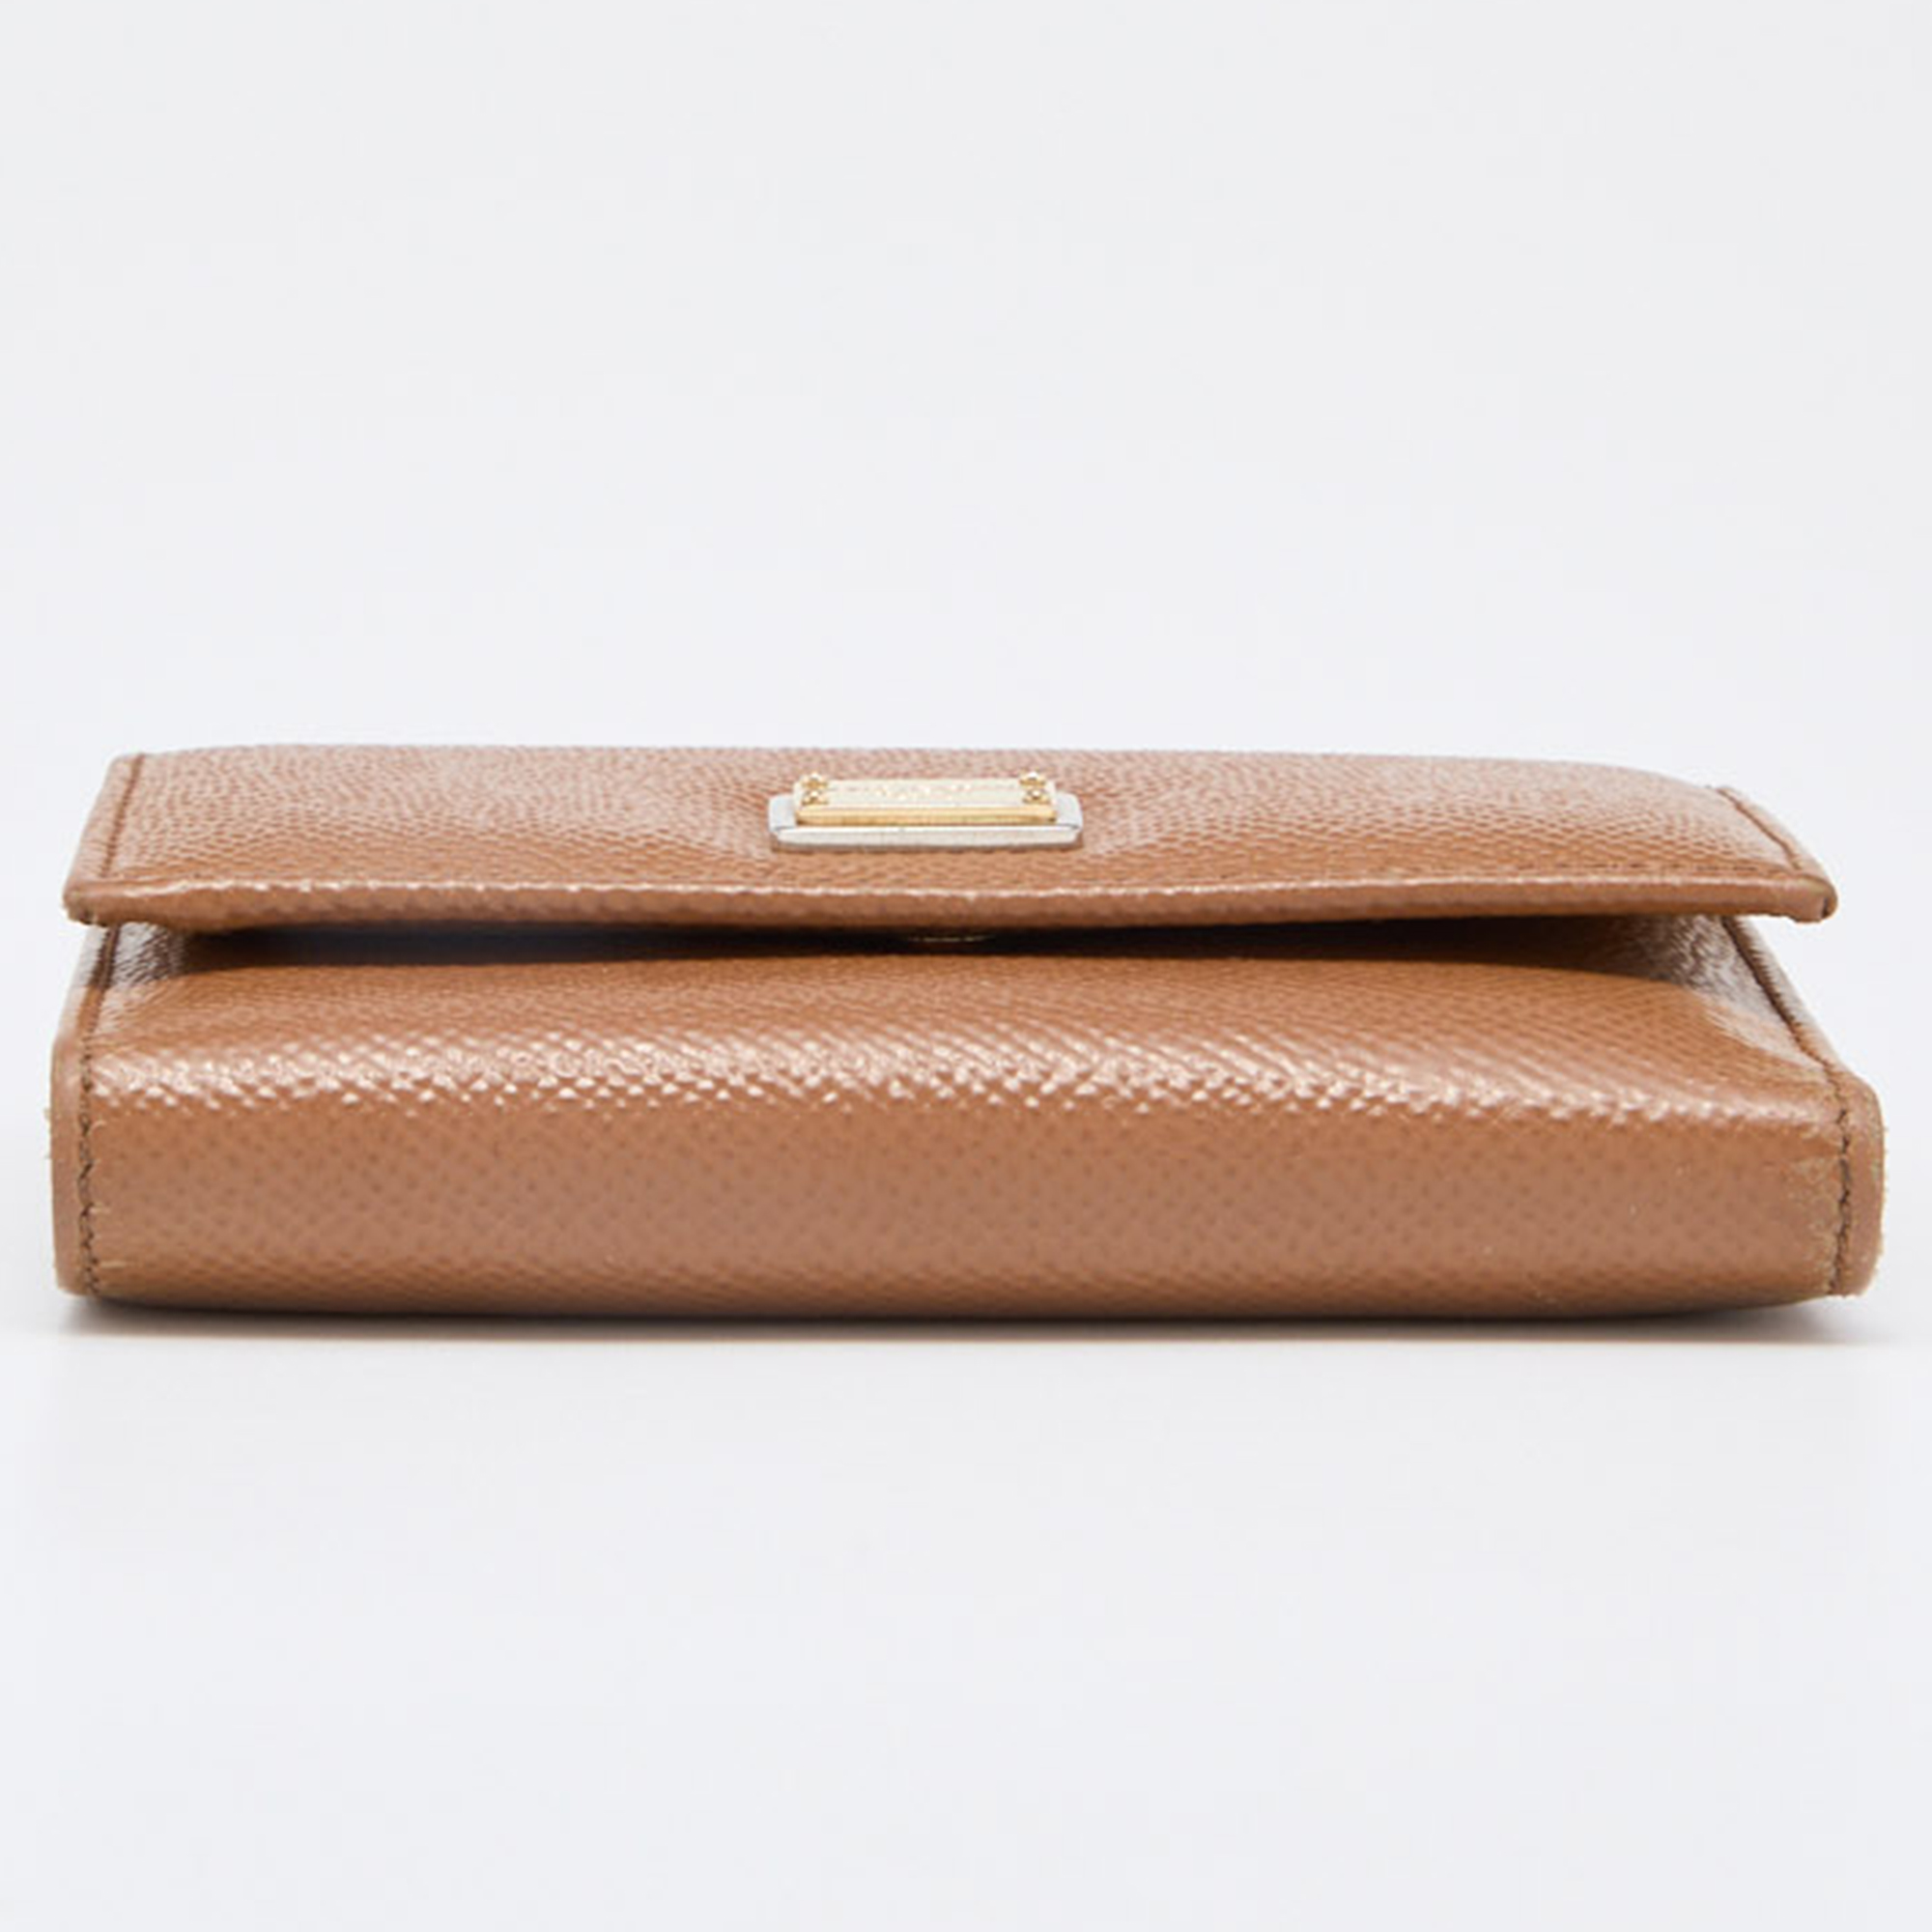 Dolce & Gabbana Beige Leather Trifold Wallet